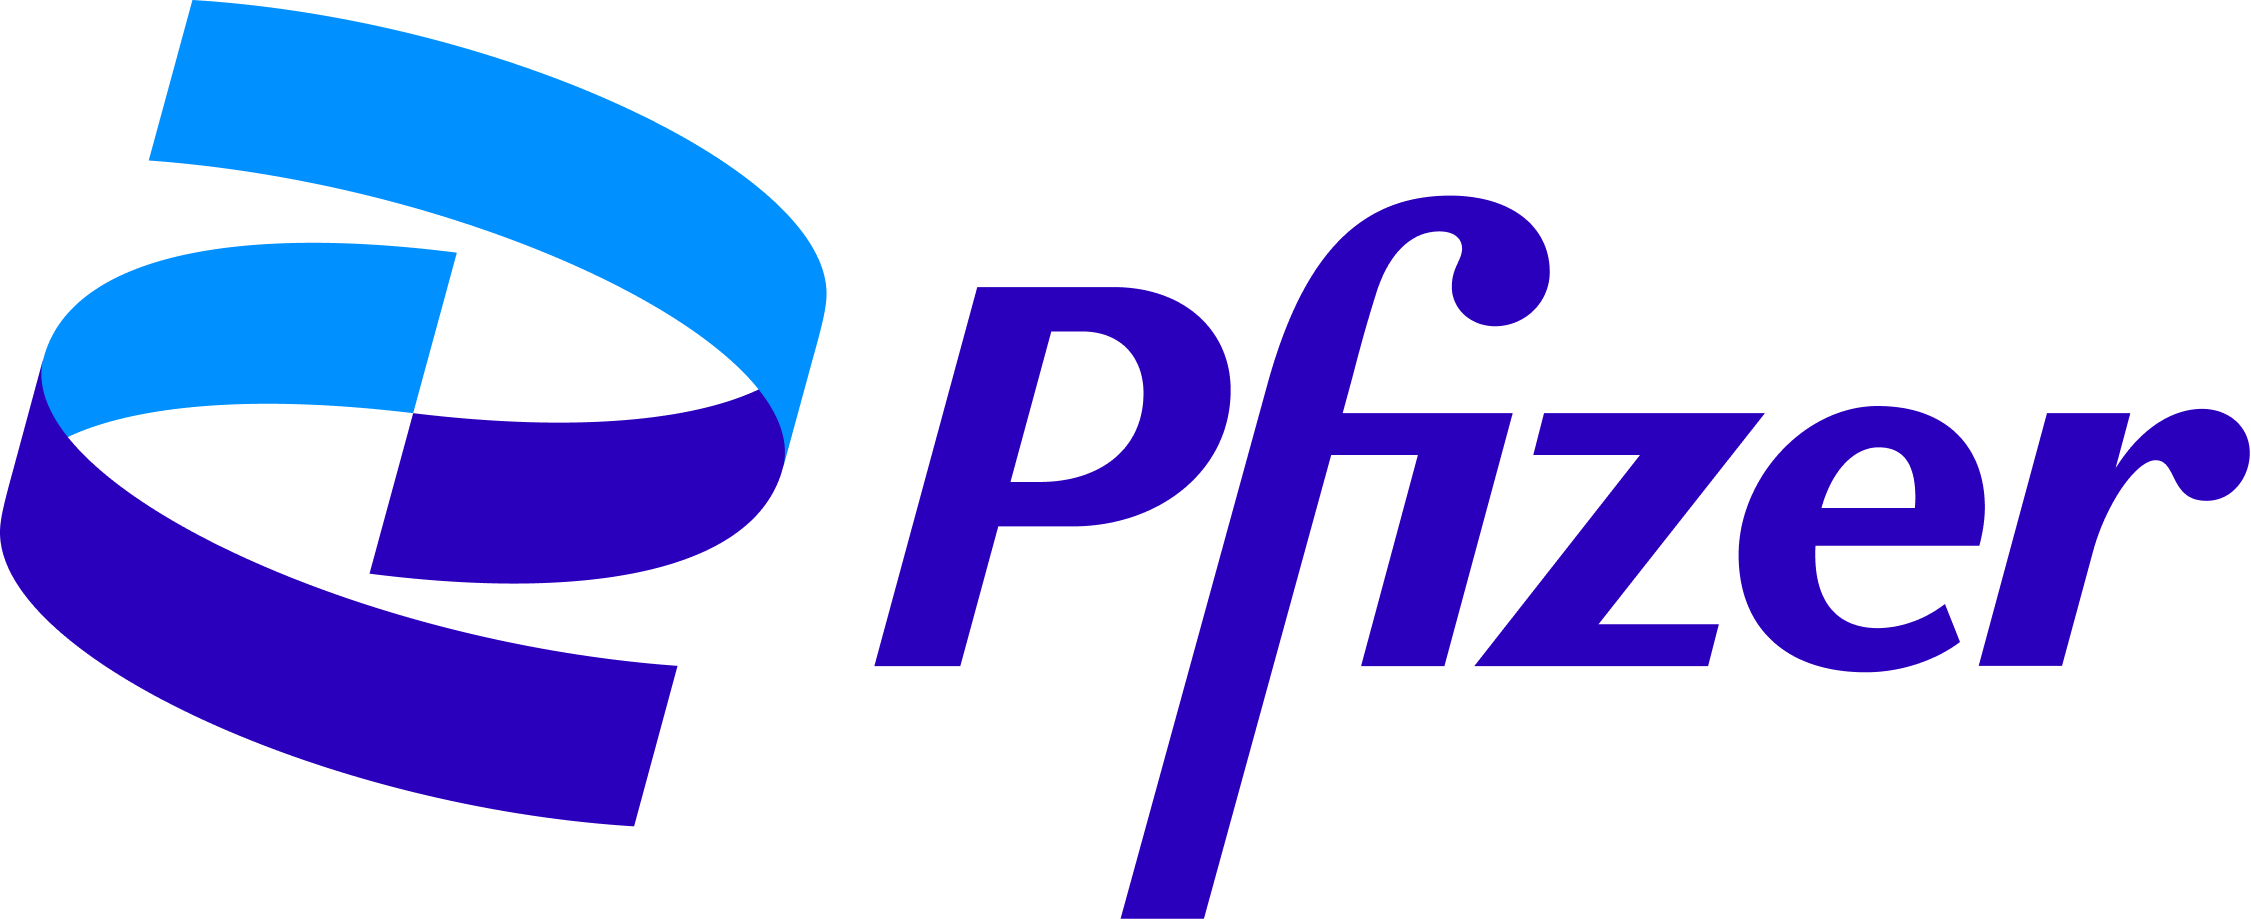 Pfizer logo in blue color